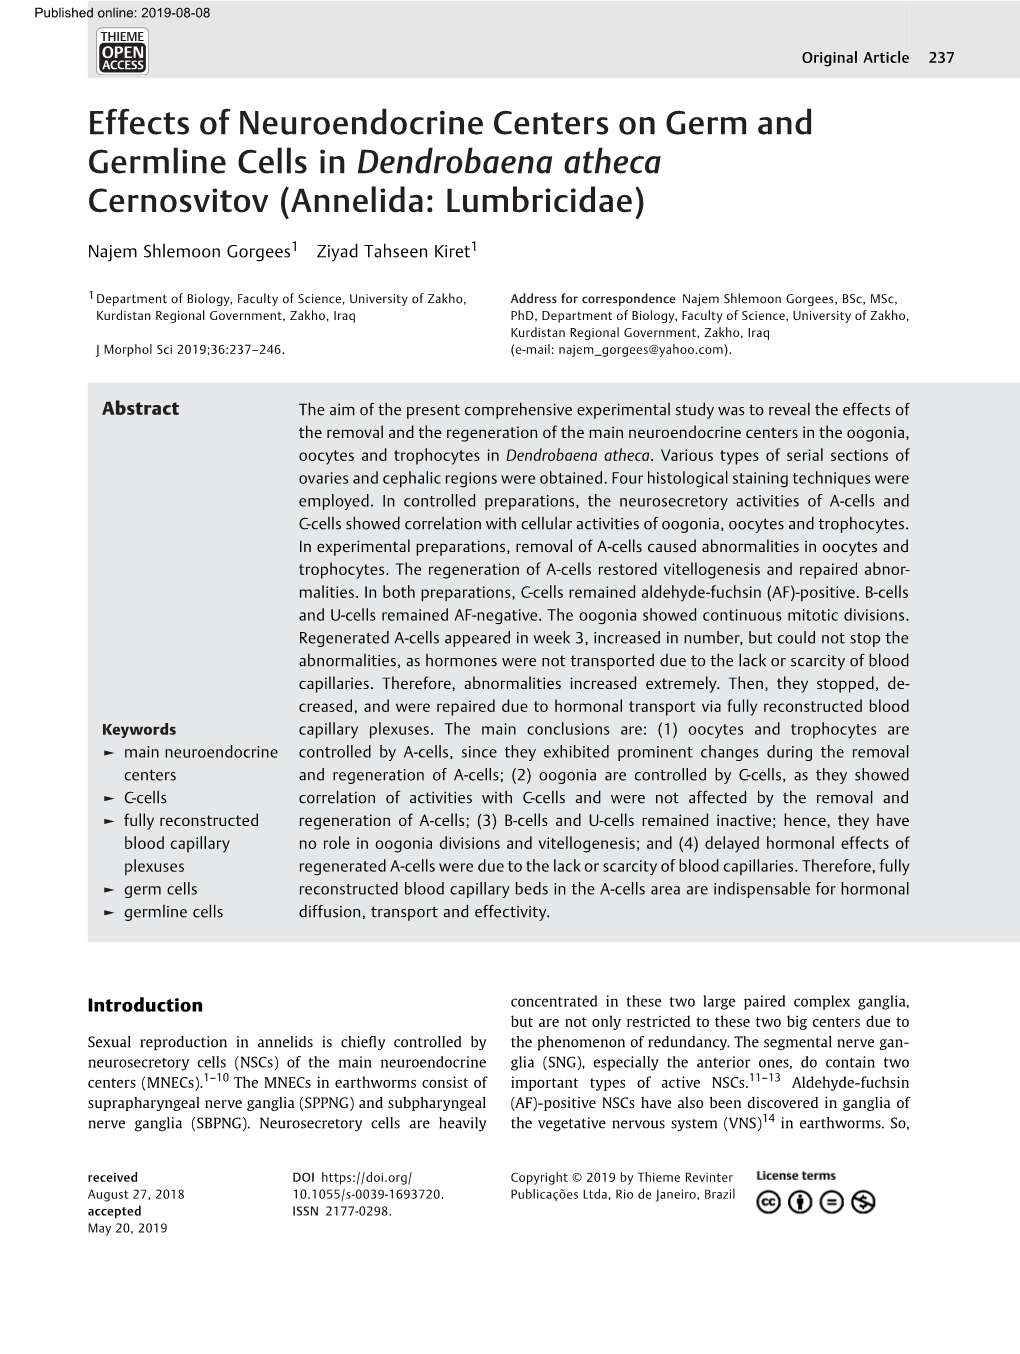 Effects of Neuroendocrine Centers on Germ and Germline Cells in Dendrobaena Atheca Cernosvitov (Annelida: Lumbricidae)